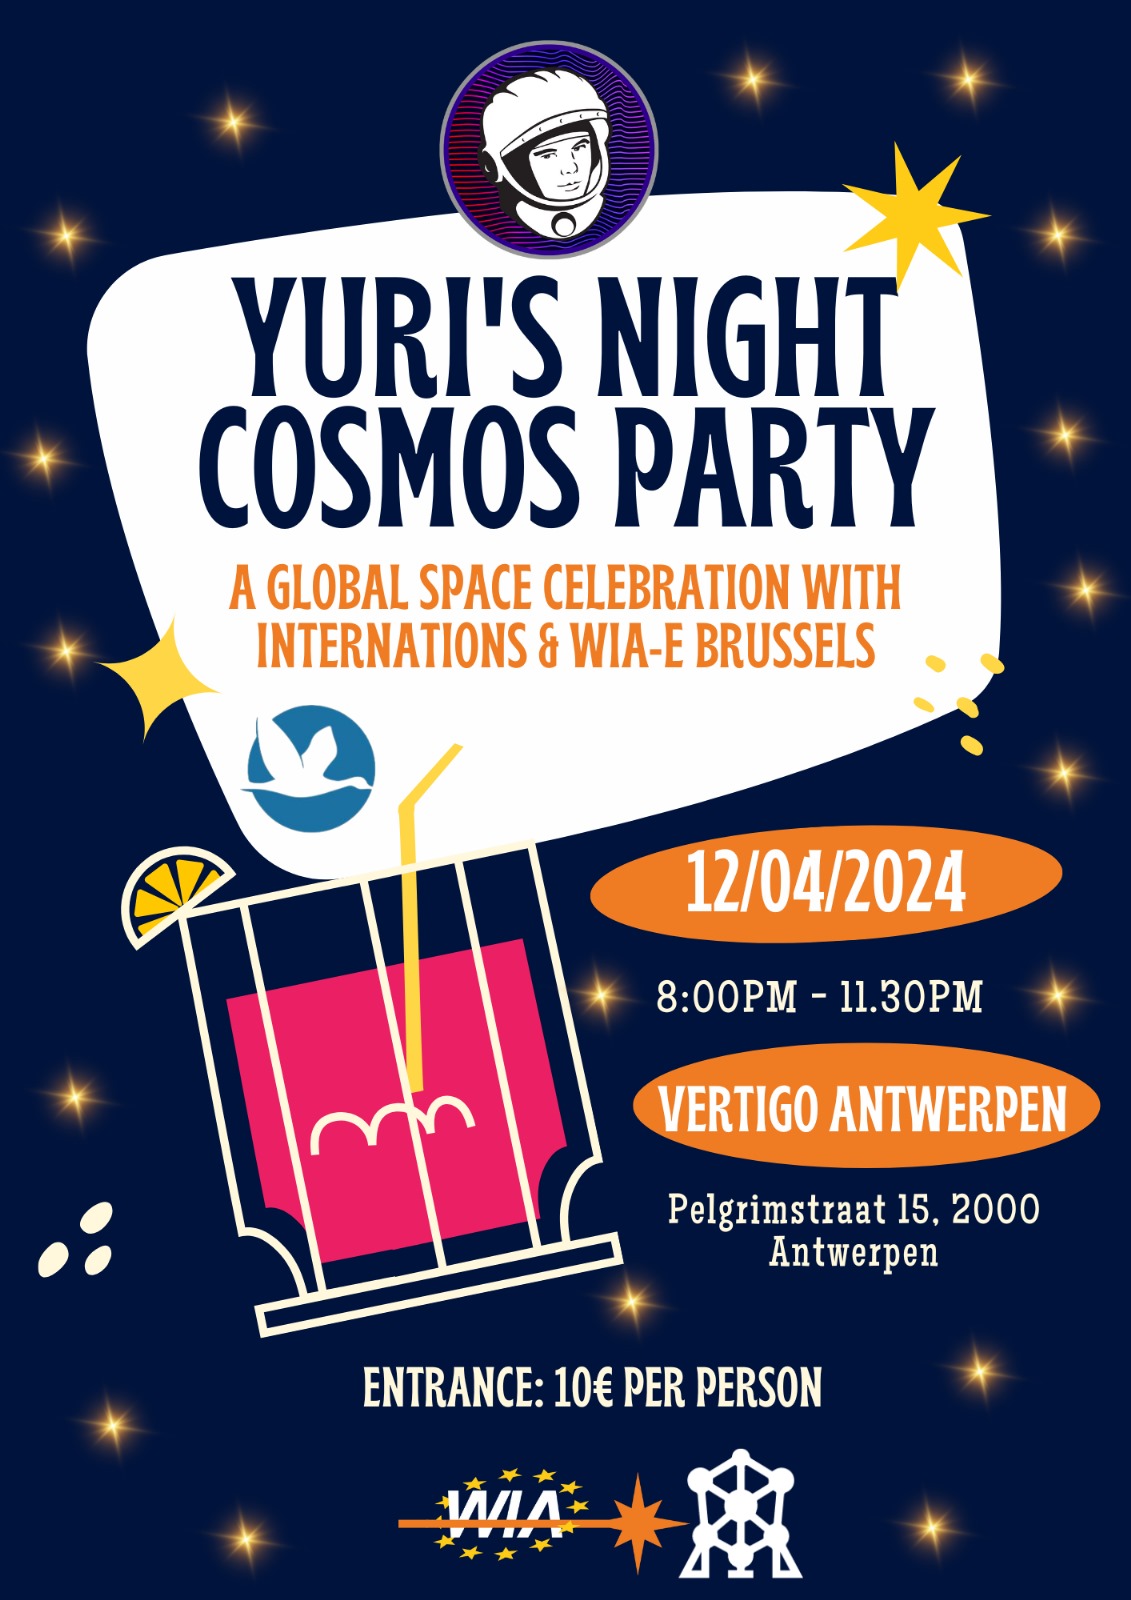 YURI’S NIGHT COSMOS PARTY